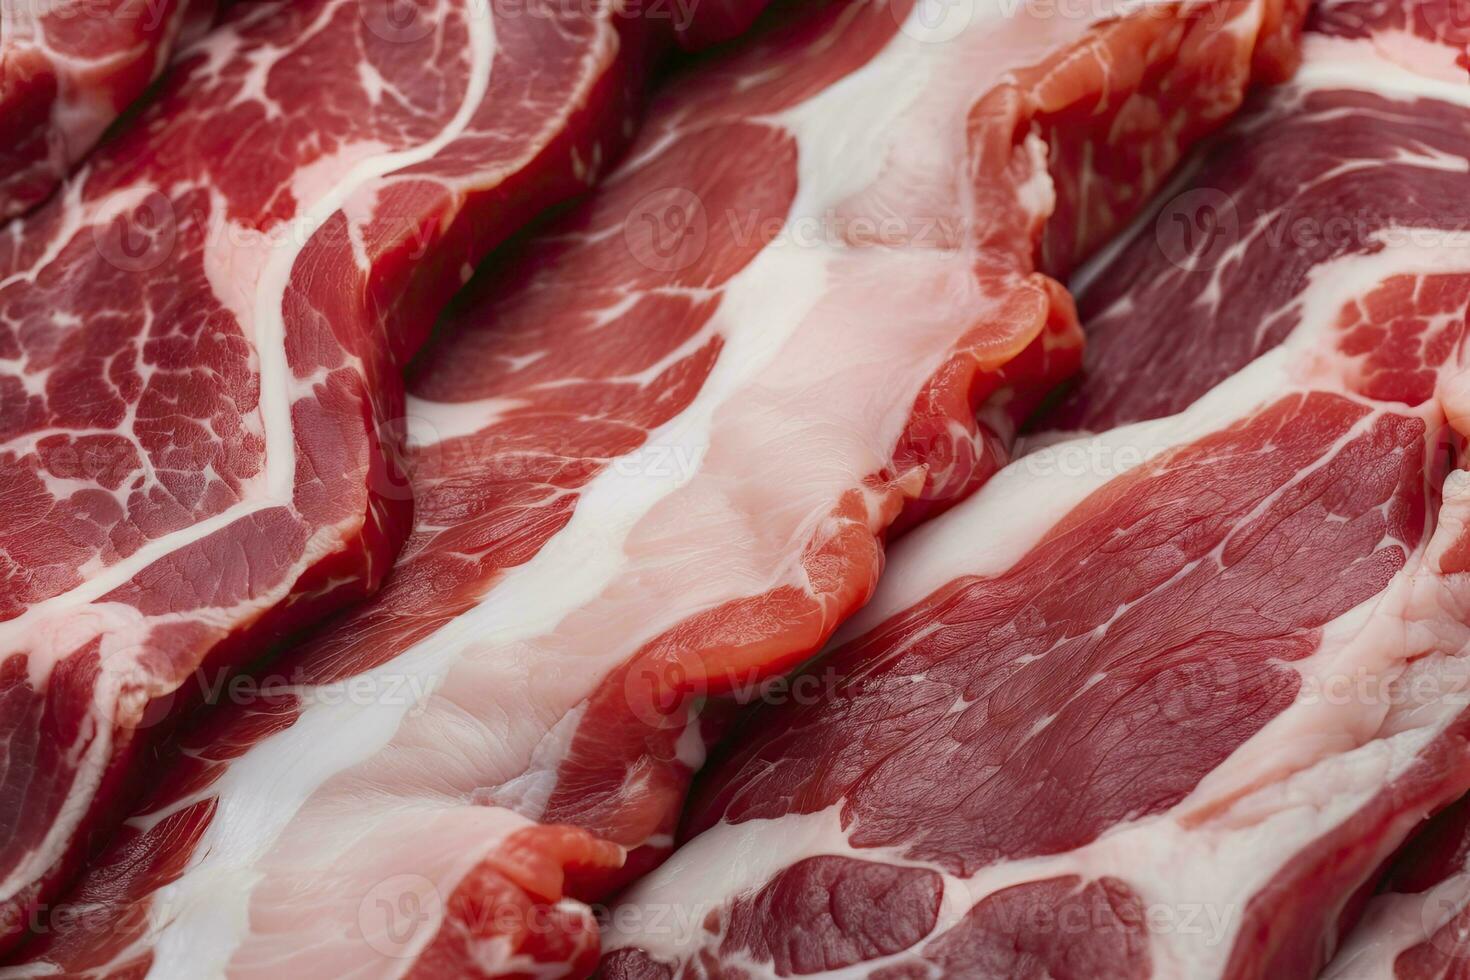 ai gegenereerd macro schot van varkensvlees vlees. vlees getextureerde achtergrond. rundvlees steak is rauw en sappig. ai gegenereerd foto